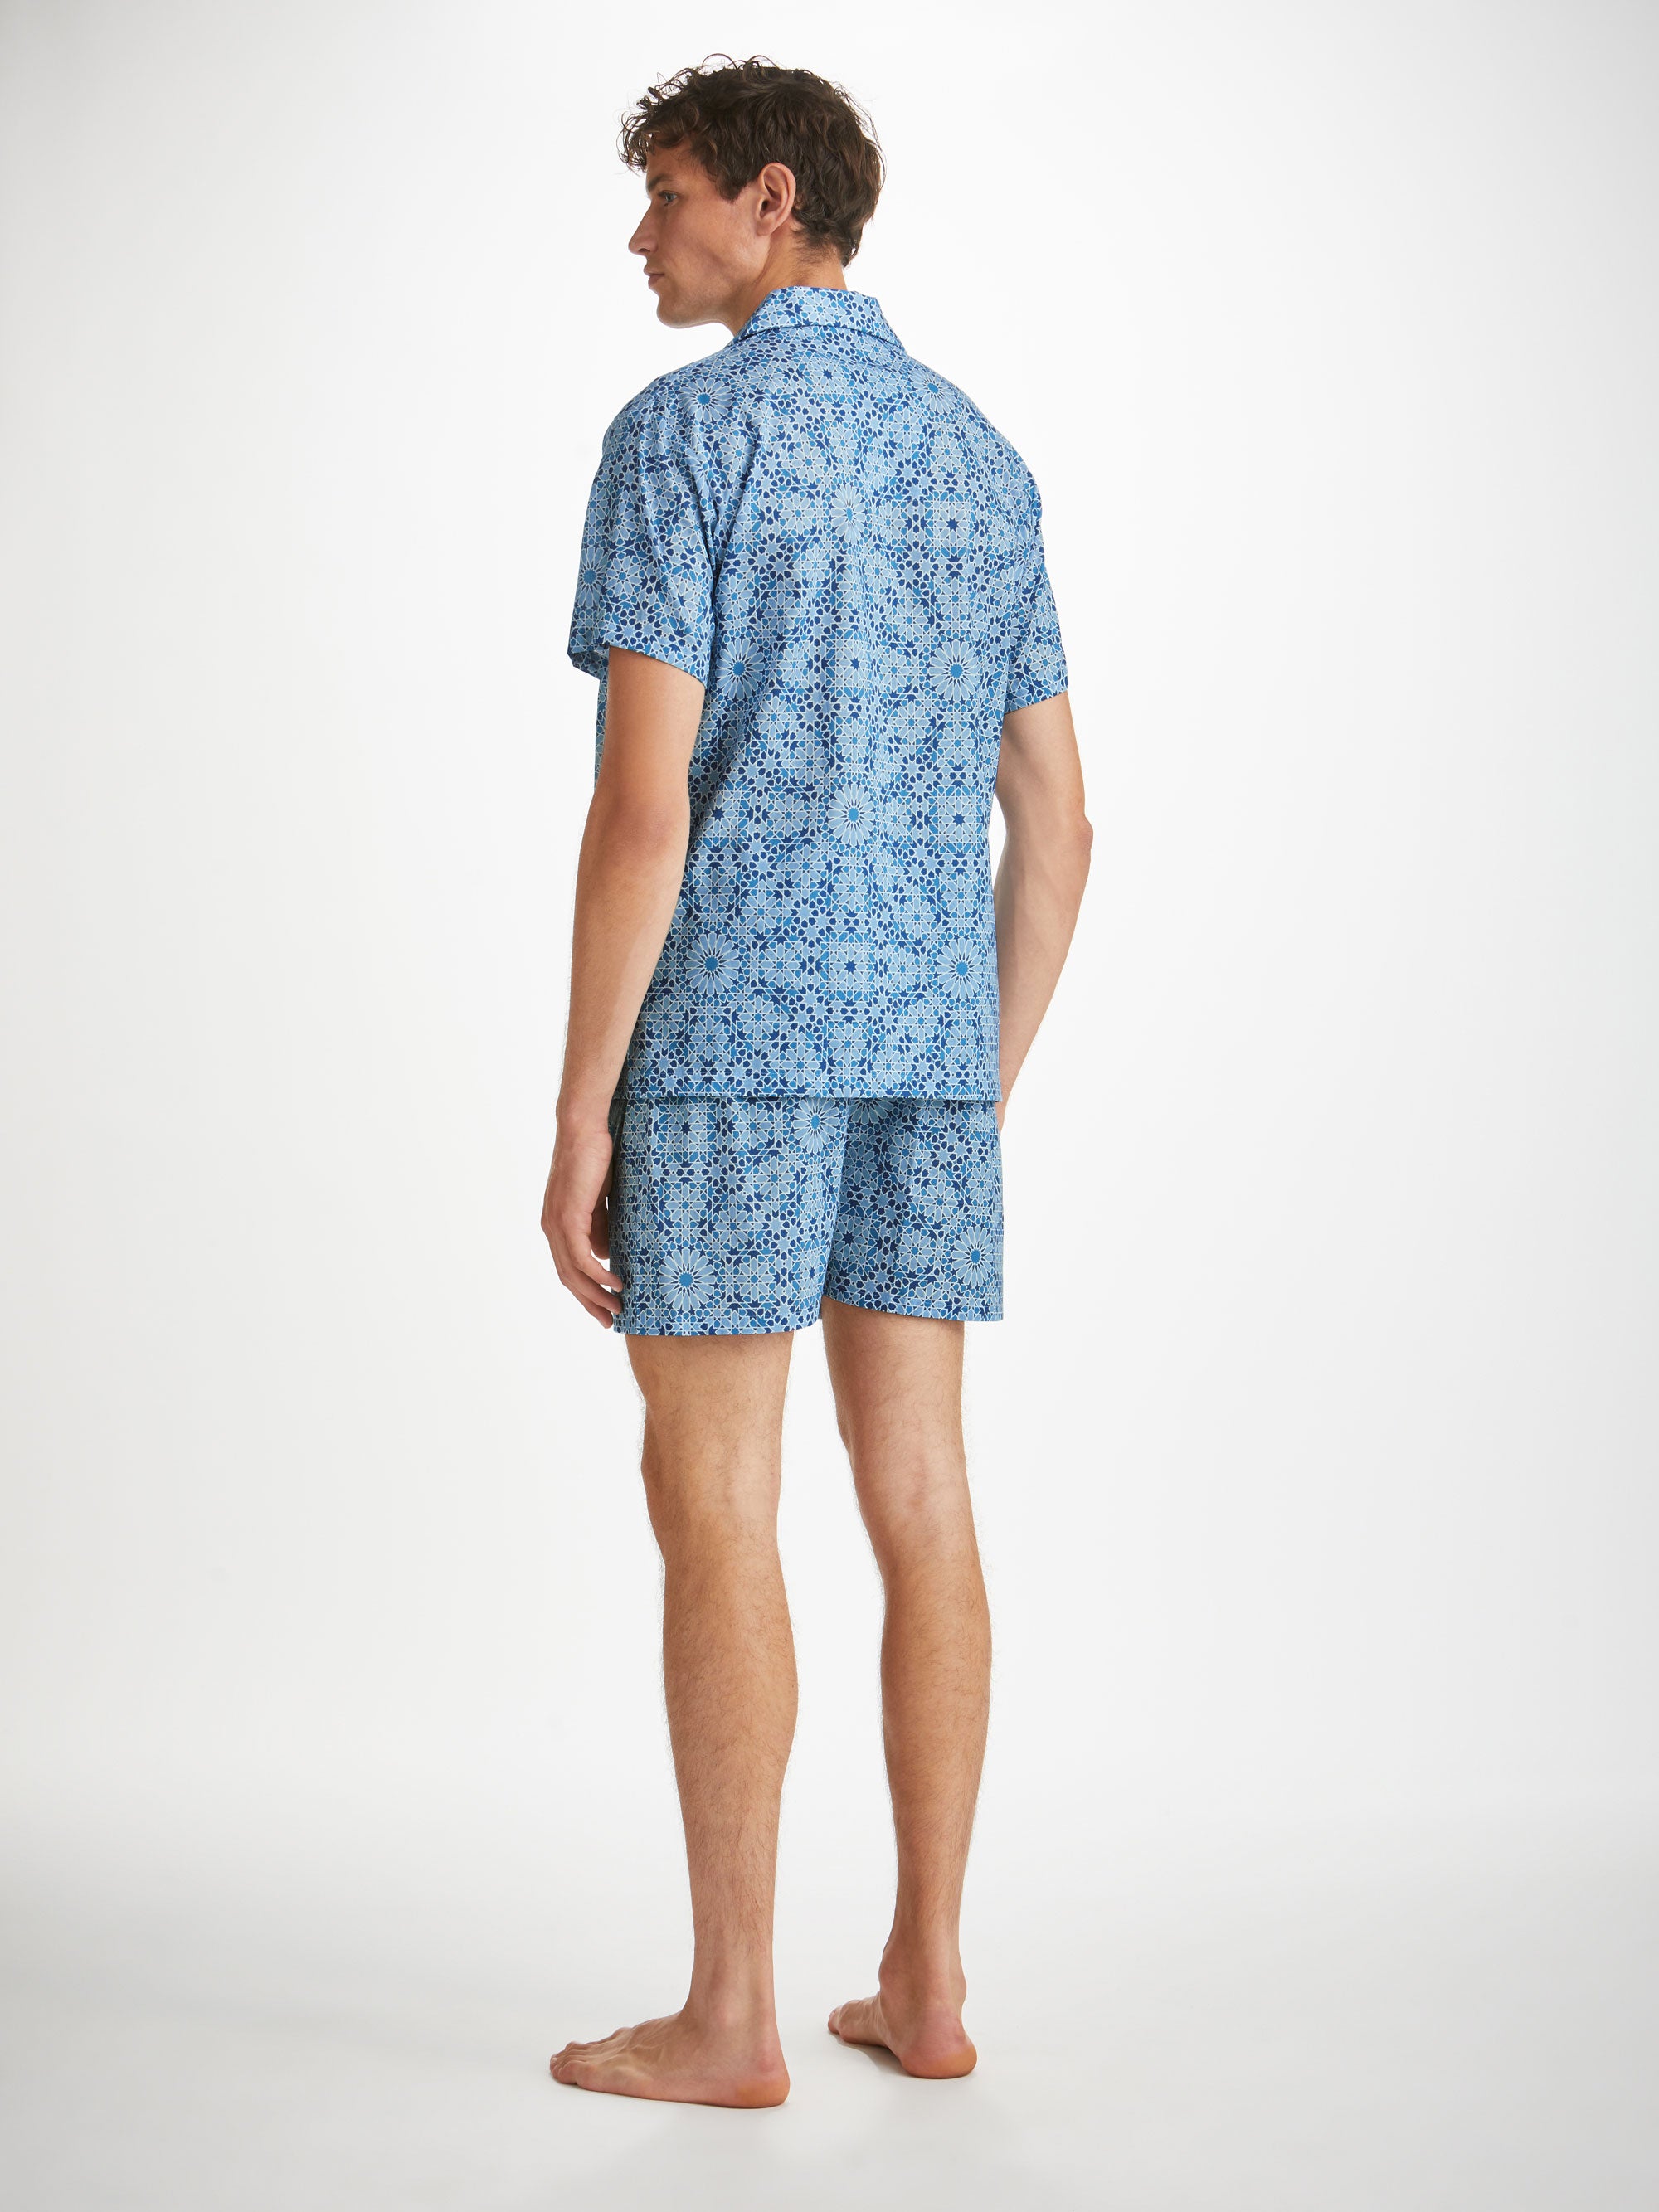 Men's Short Pyjamas Ledbury 69 Cotton Batiste Blue